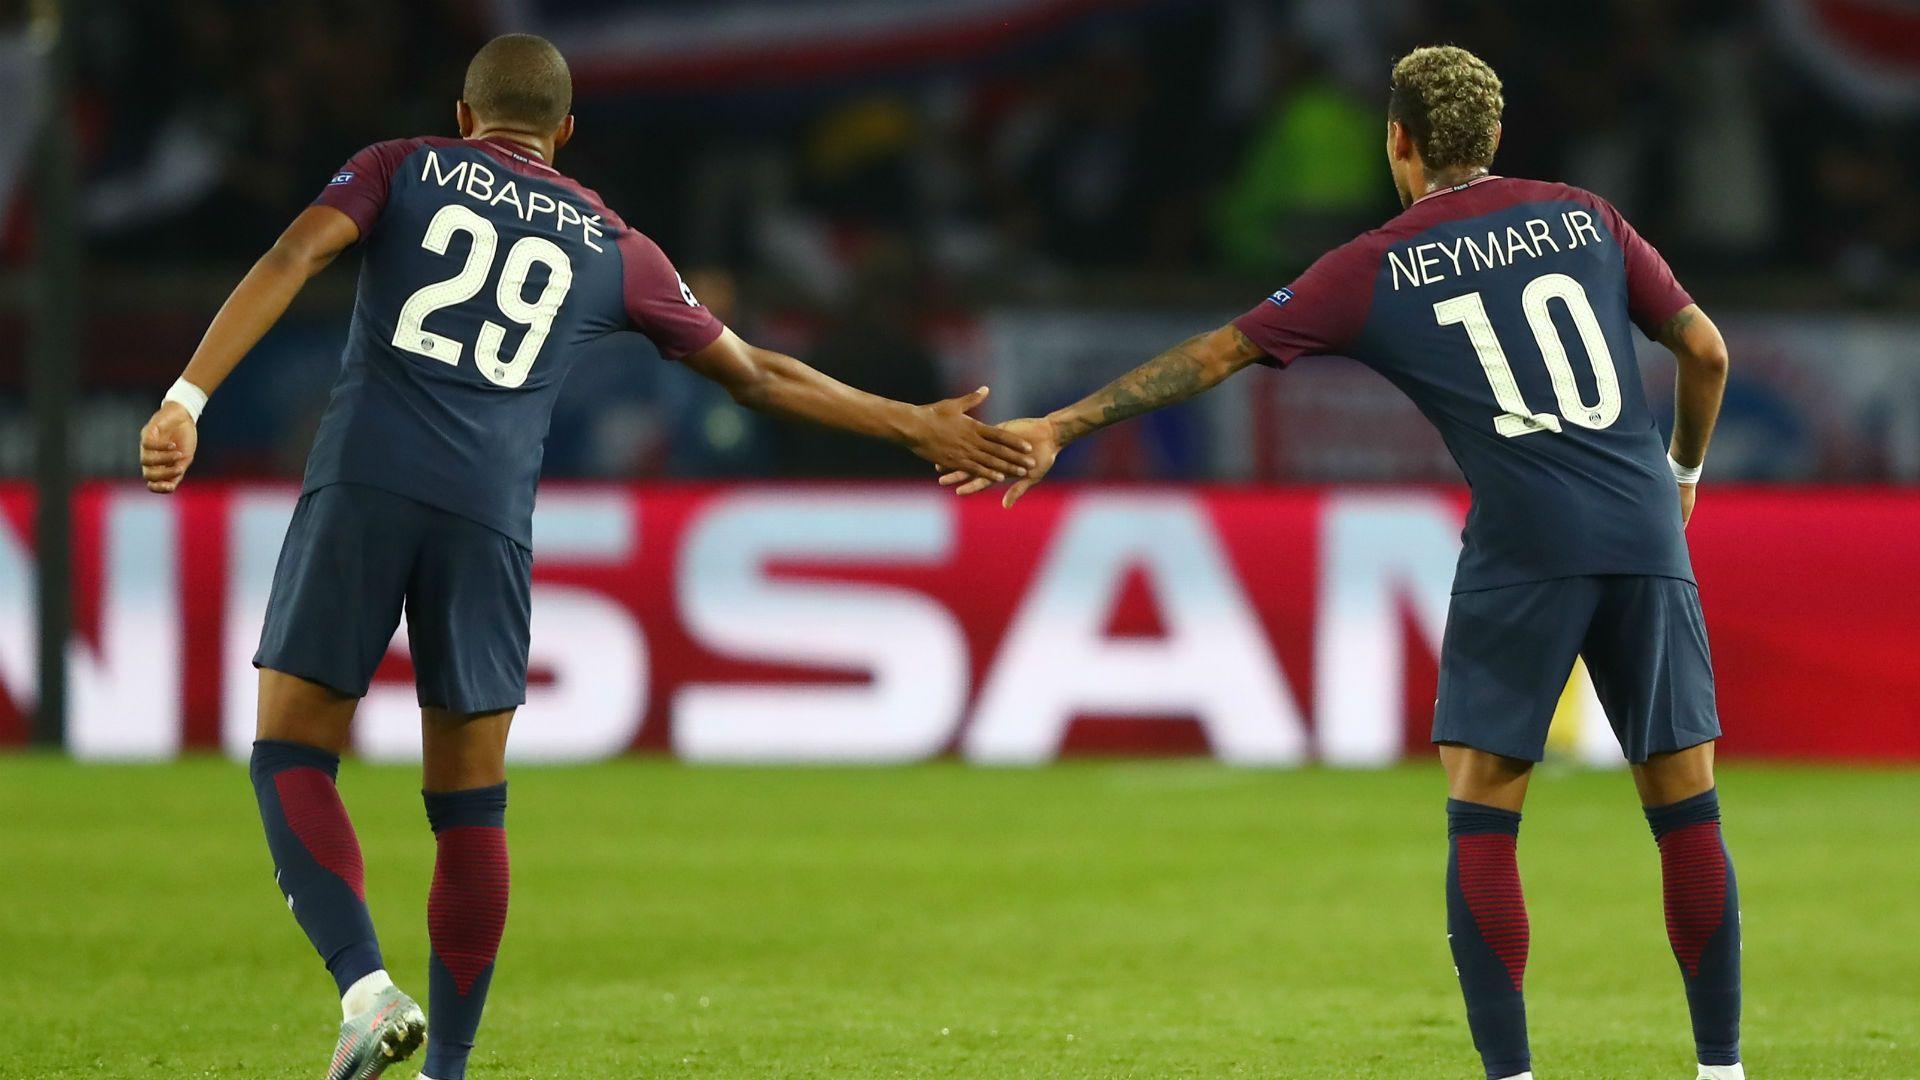 Neymar plans to emulate Messi